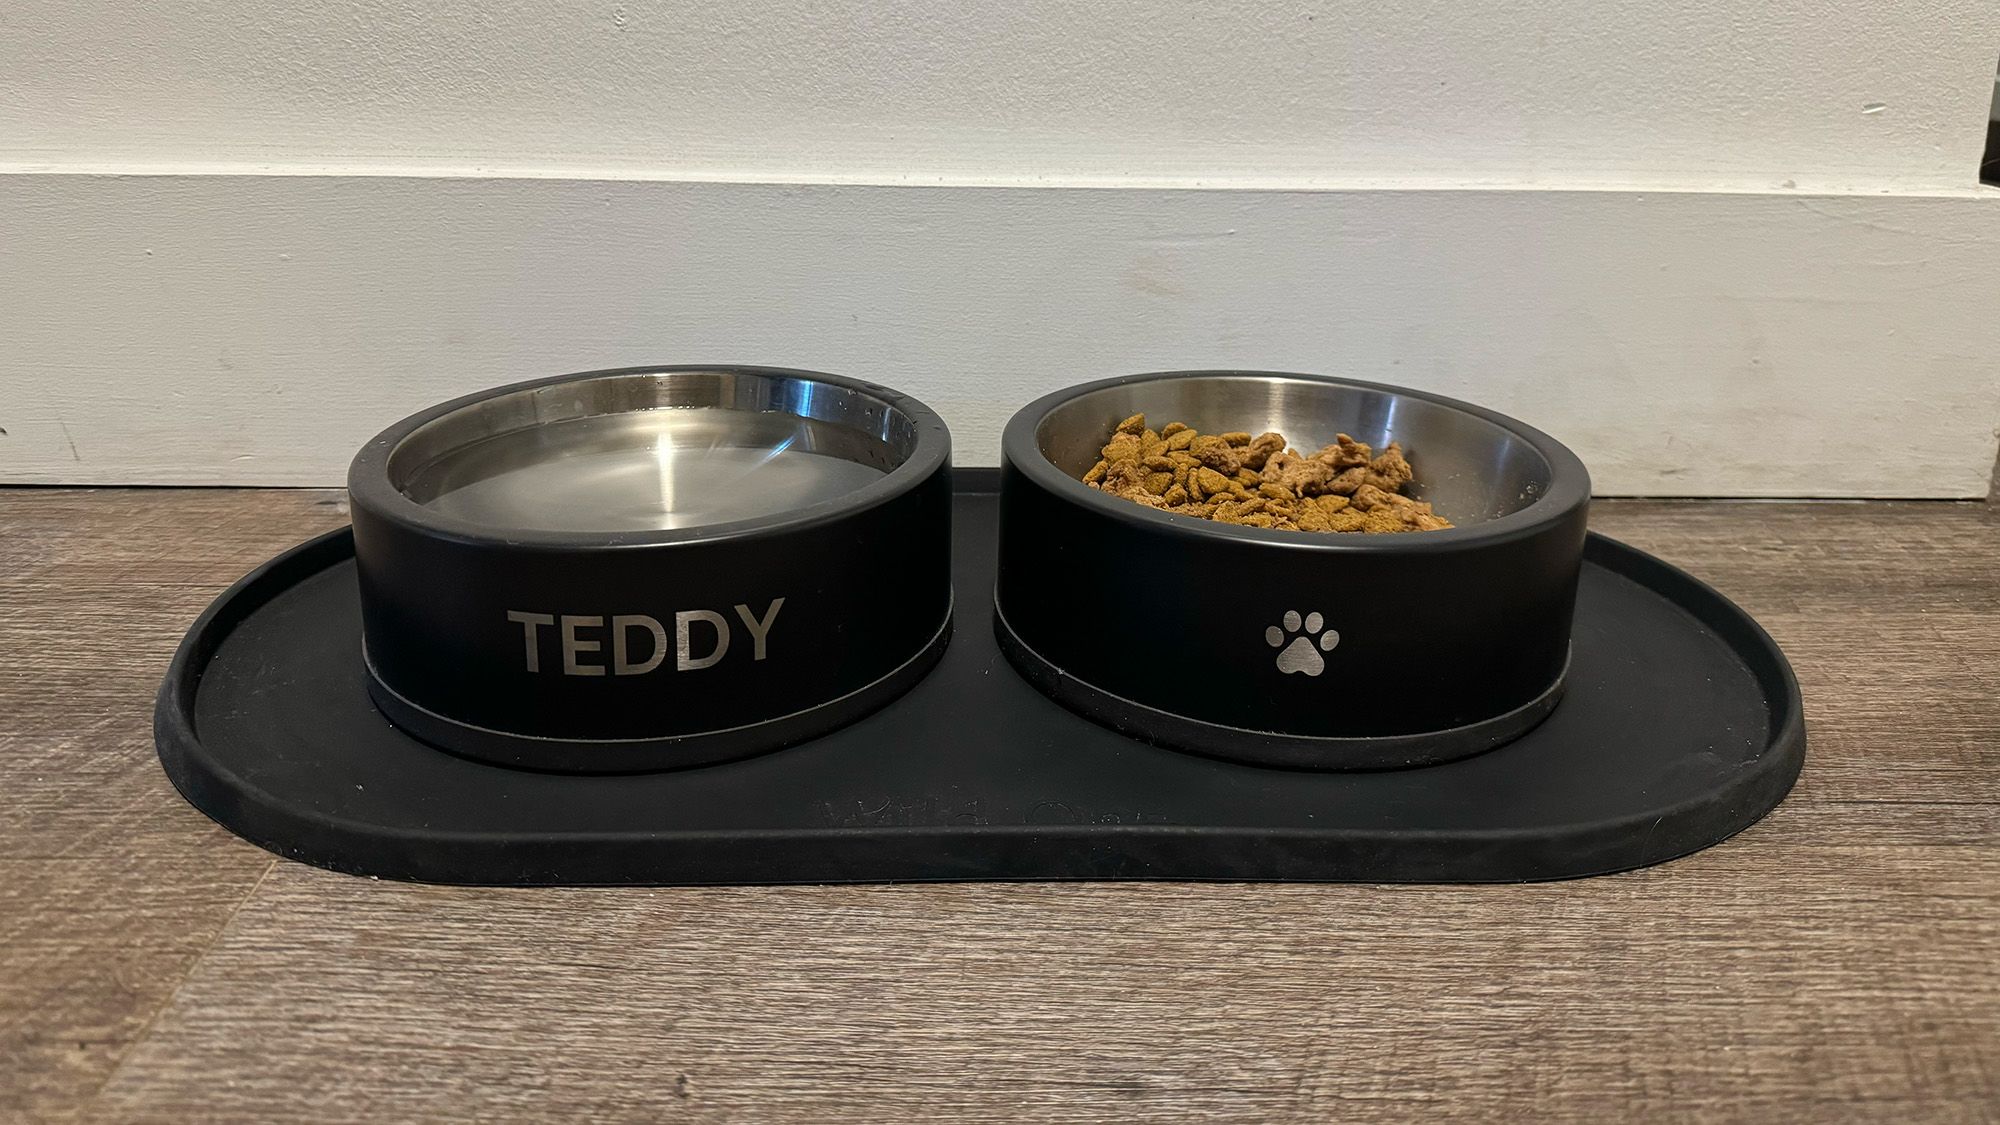 https://media.cnn.com/api/v1/images/stellar/prod/teddy-bowls.jpg?c=original